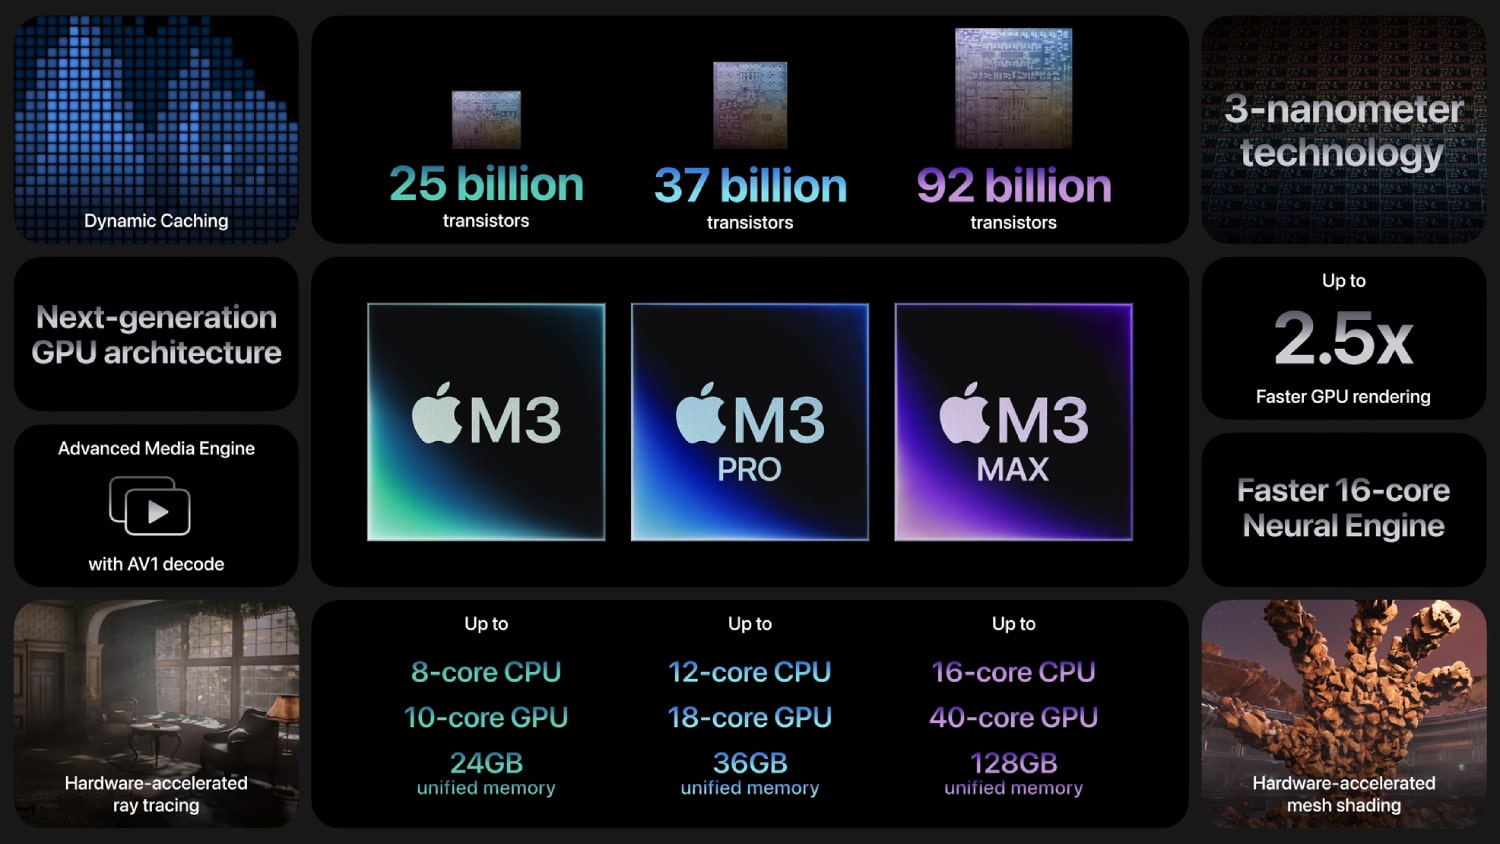 Статистика и особенности серии процессоров M3 от Apple, включая M3, M3 Pro и M3 Max.